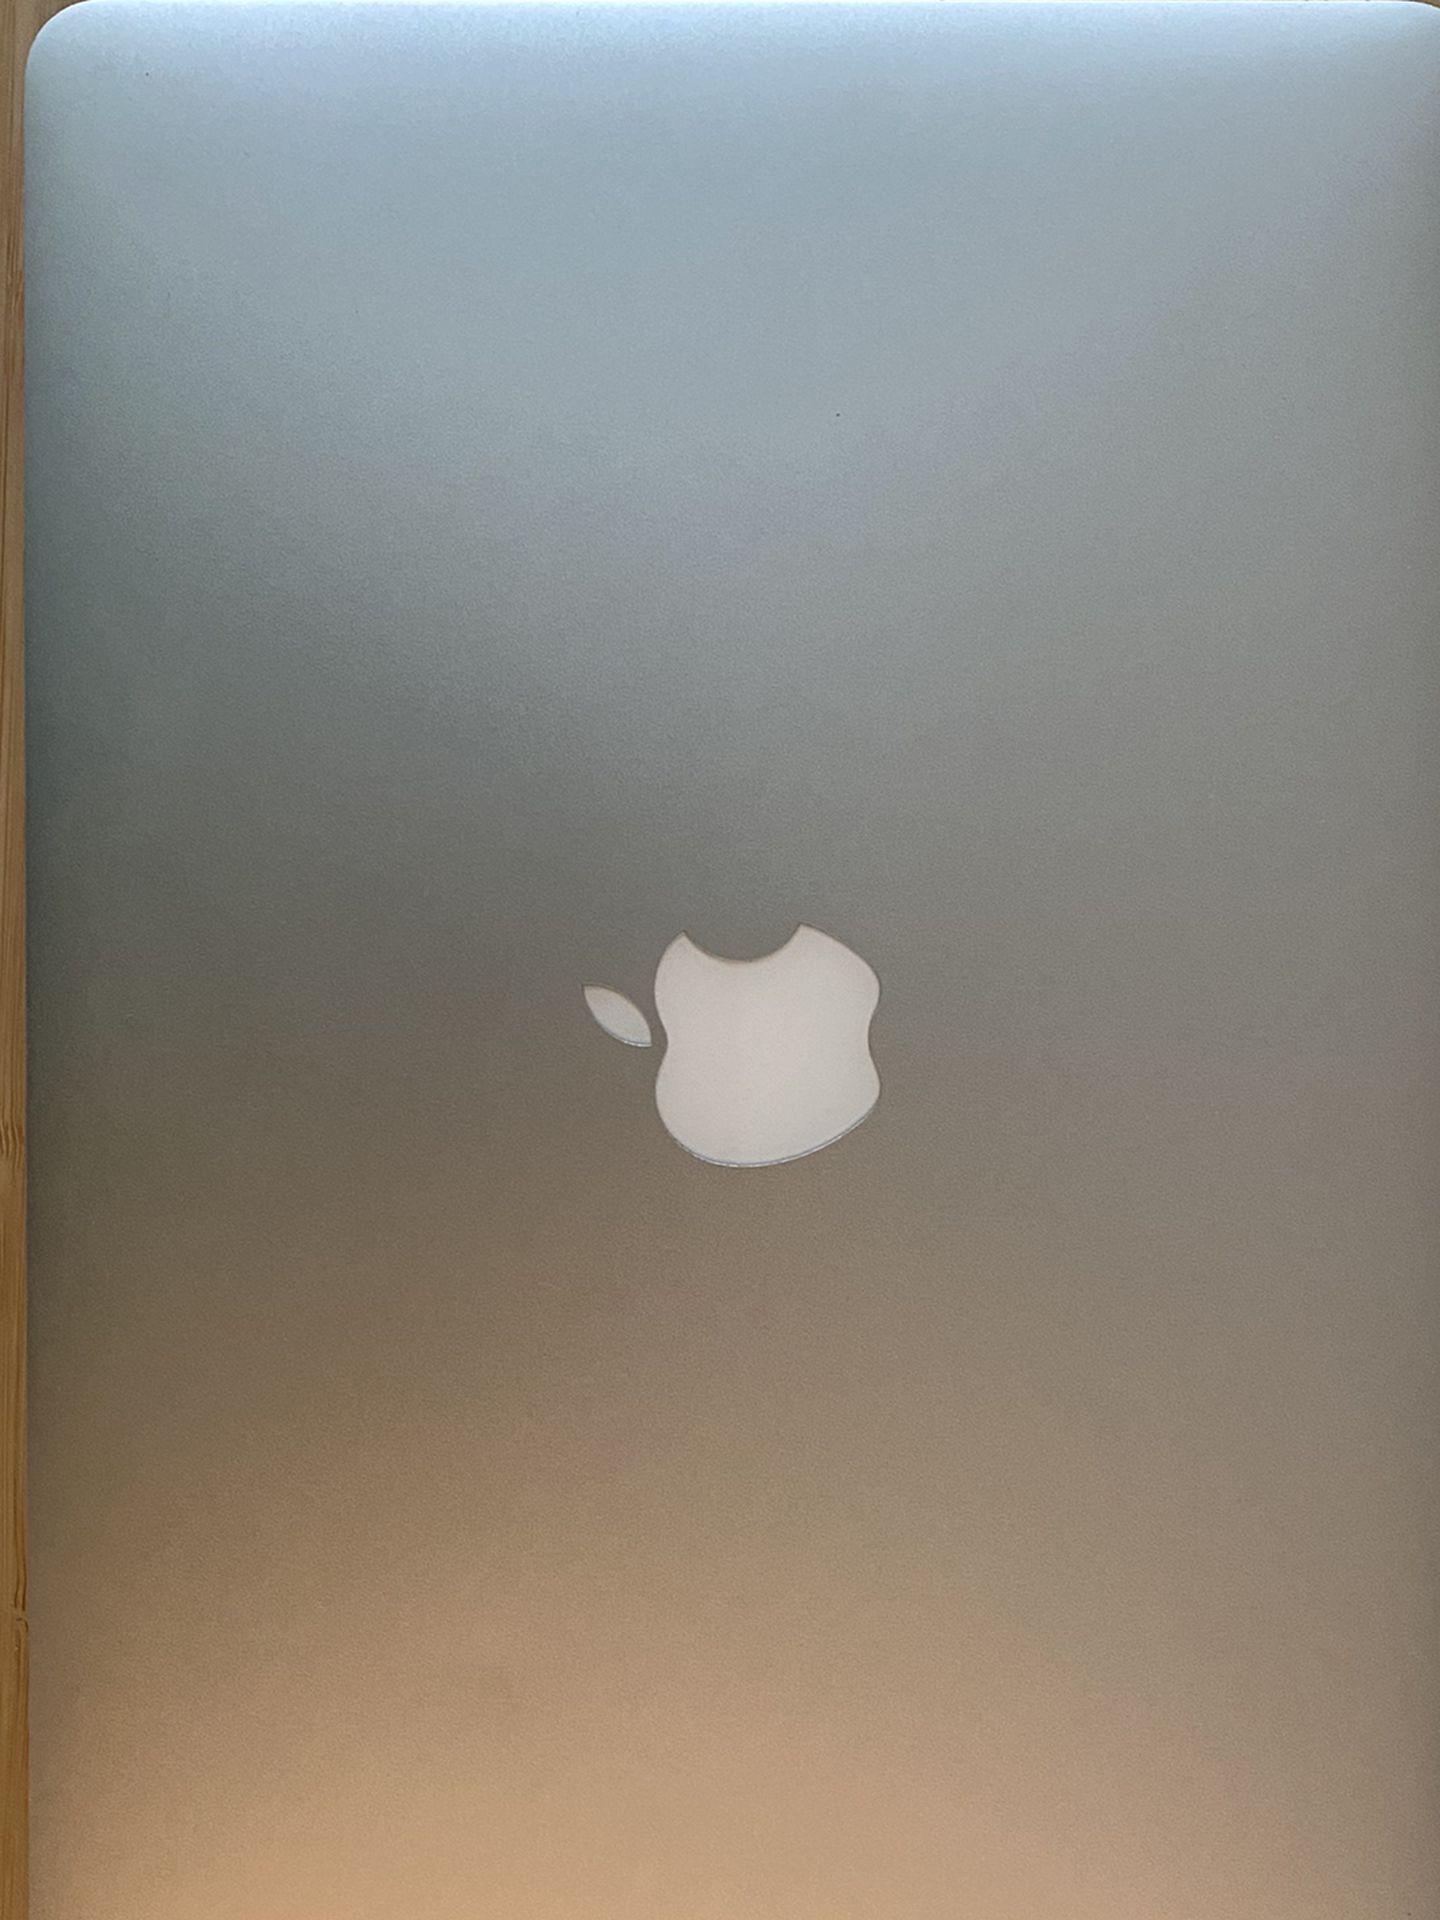 MacBook Air 13” Inch